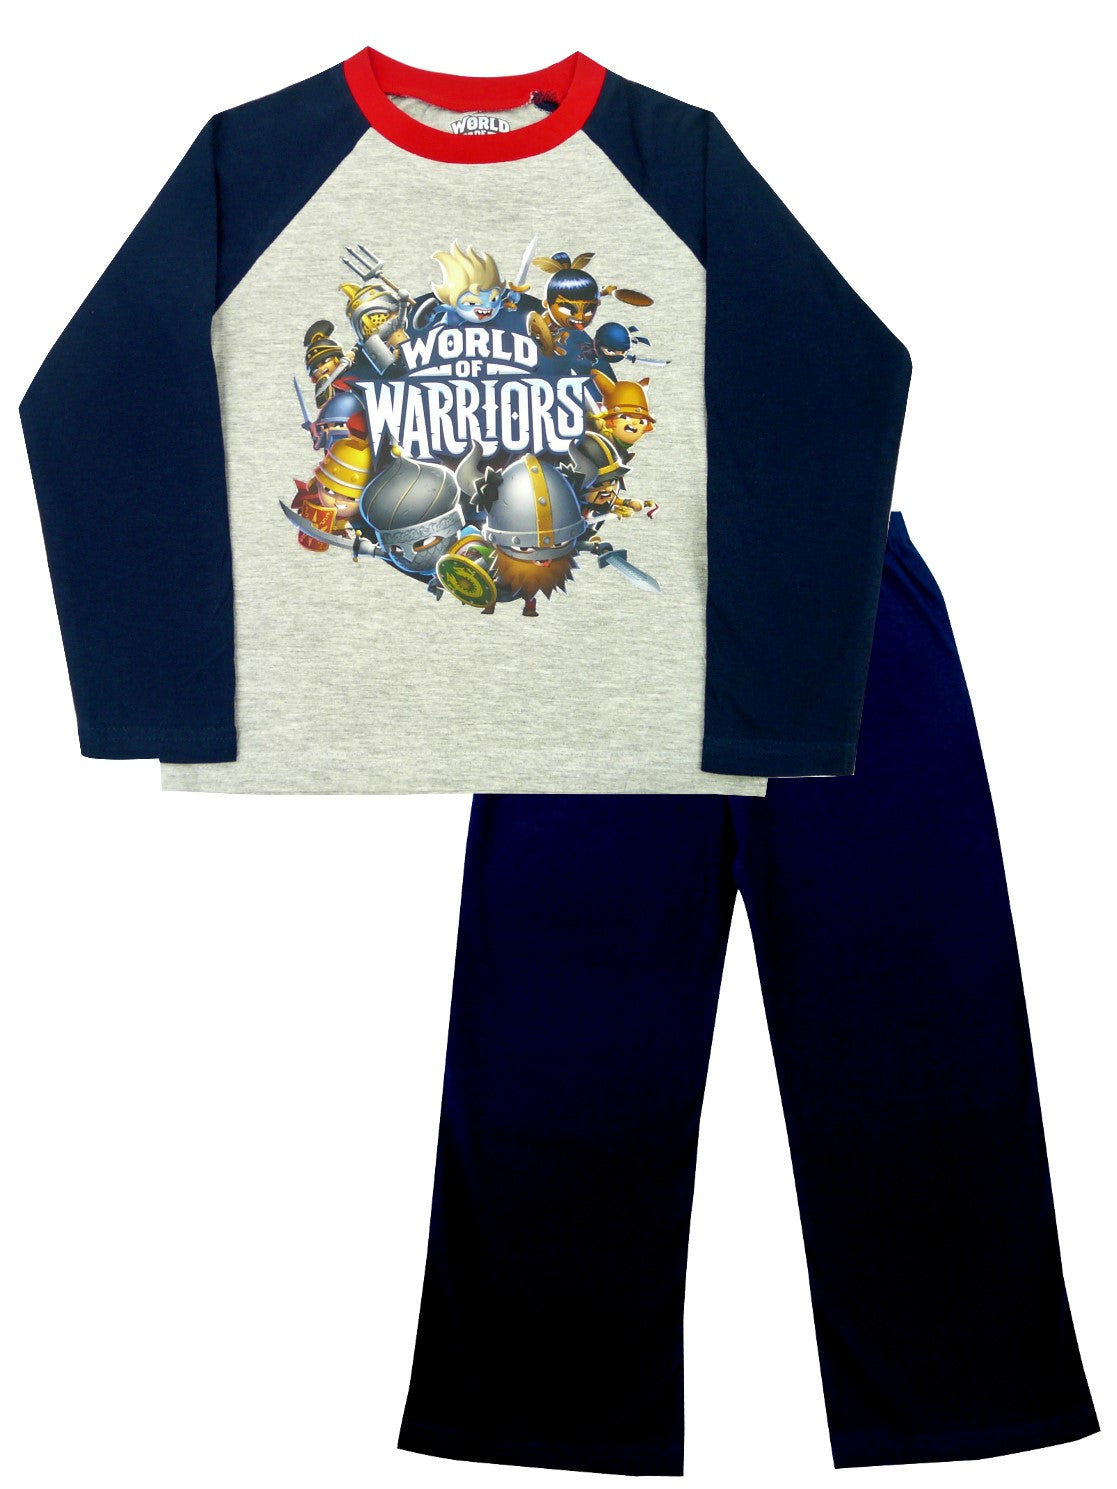 World of Warriors Boy’s Pyjamas 4-5 & 5-6 Years Available